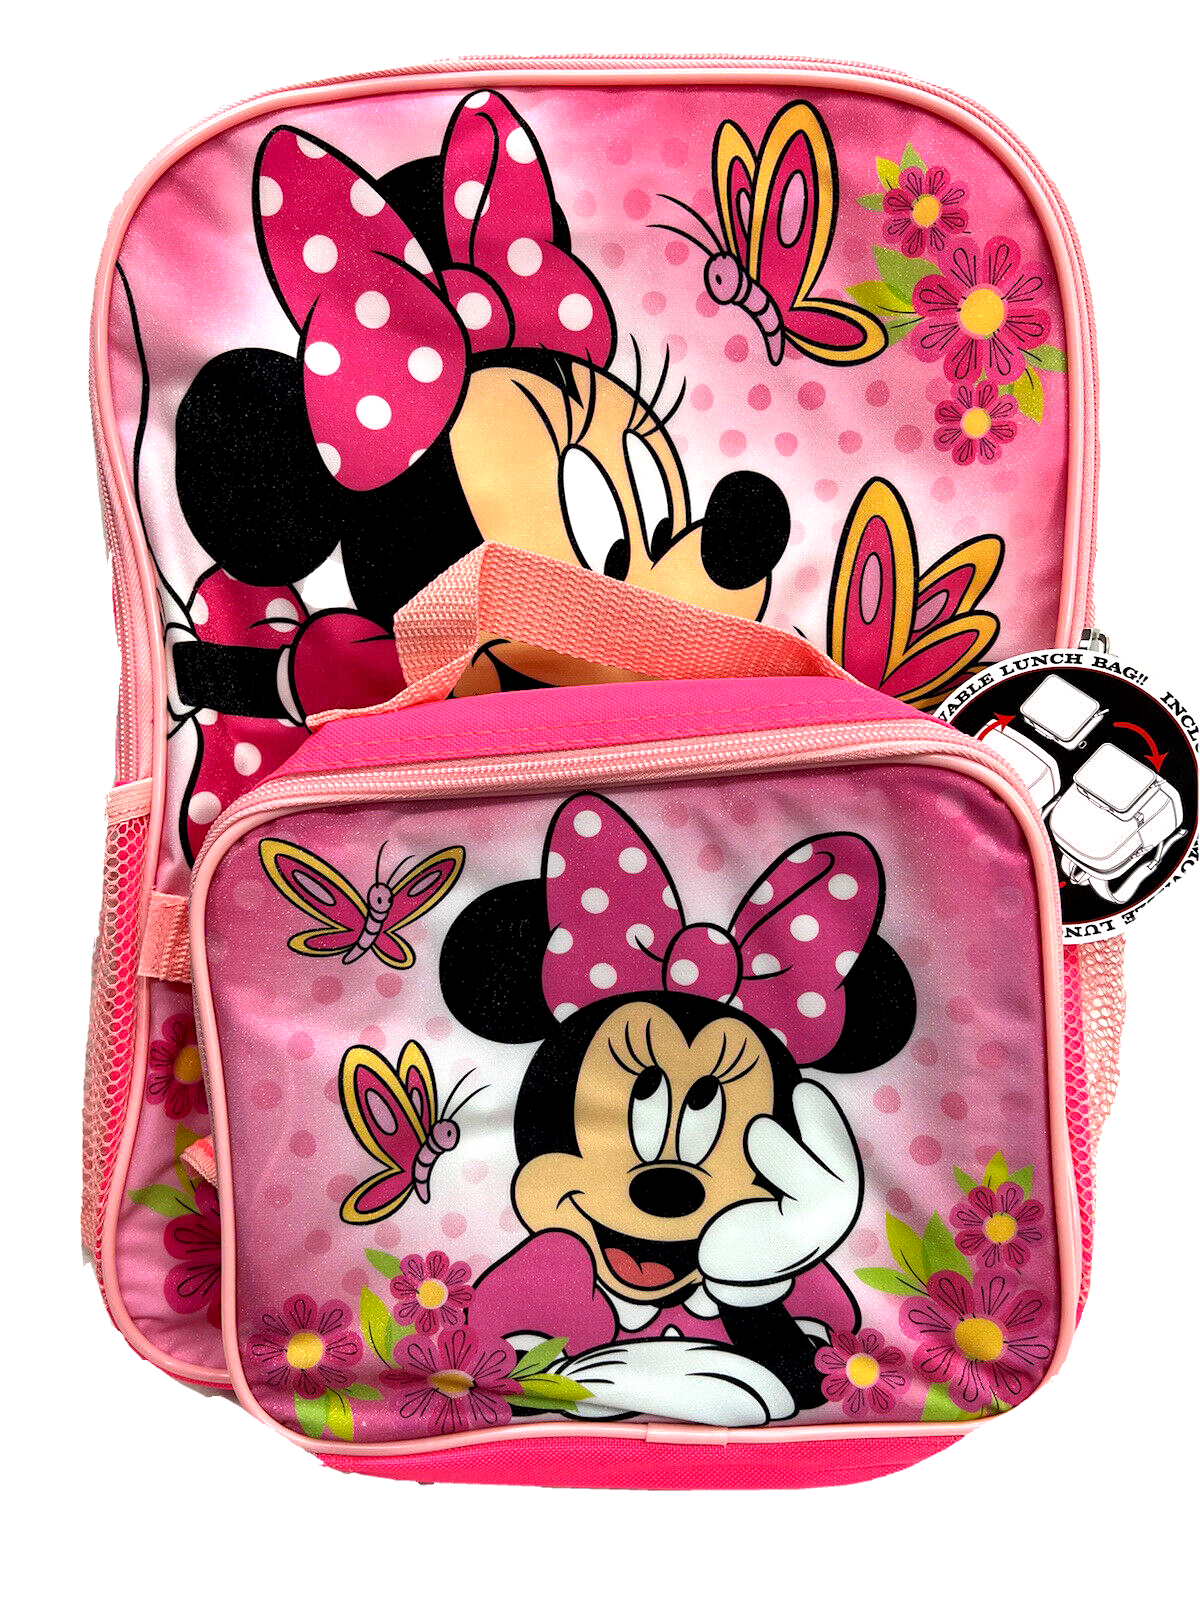 Disney Minnie Mouse Shoulder Strap Lunch Box School Bag *Licensed